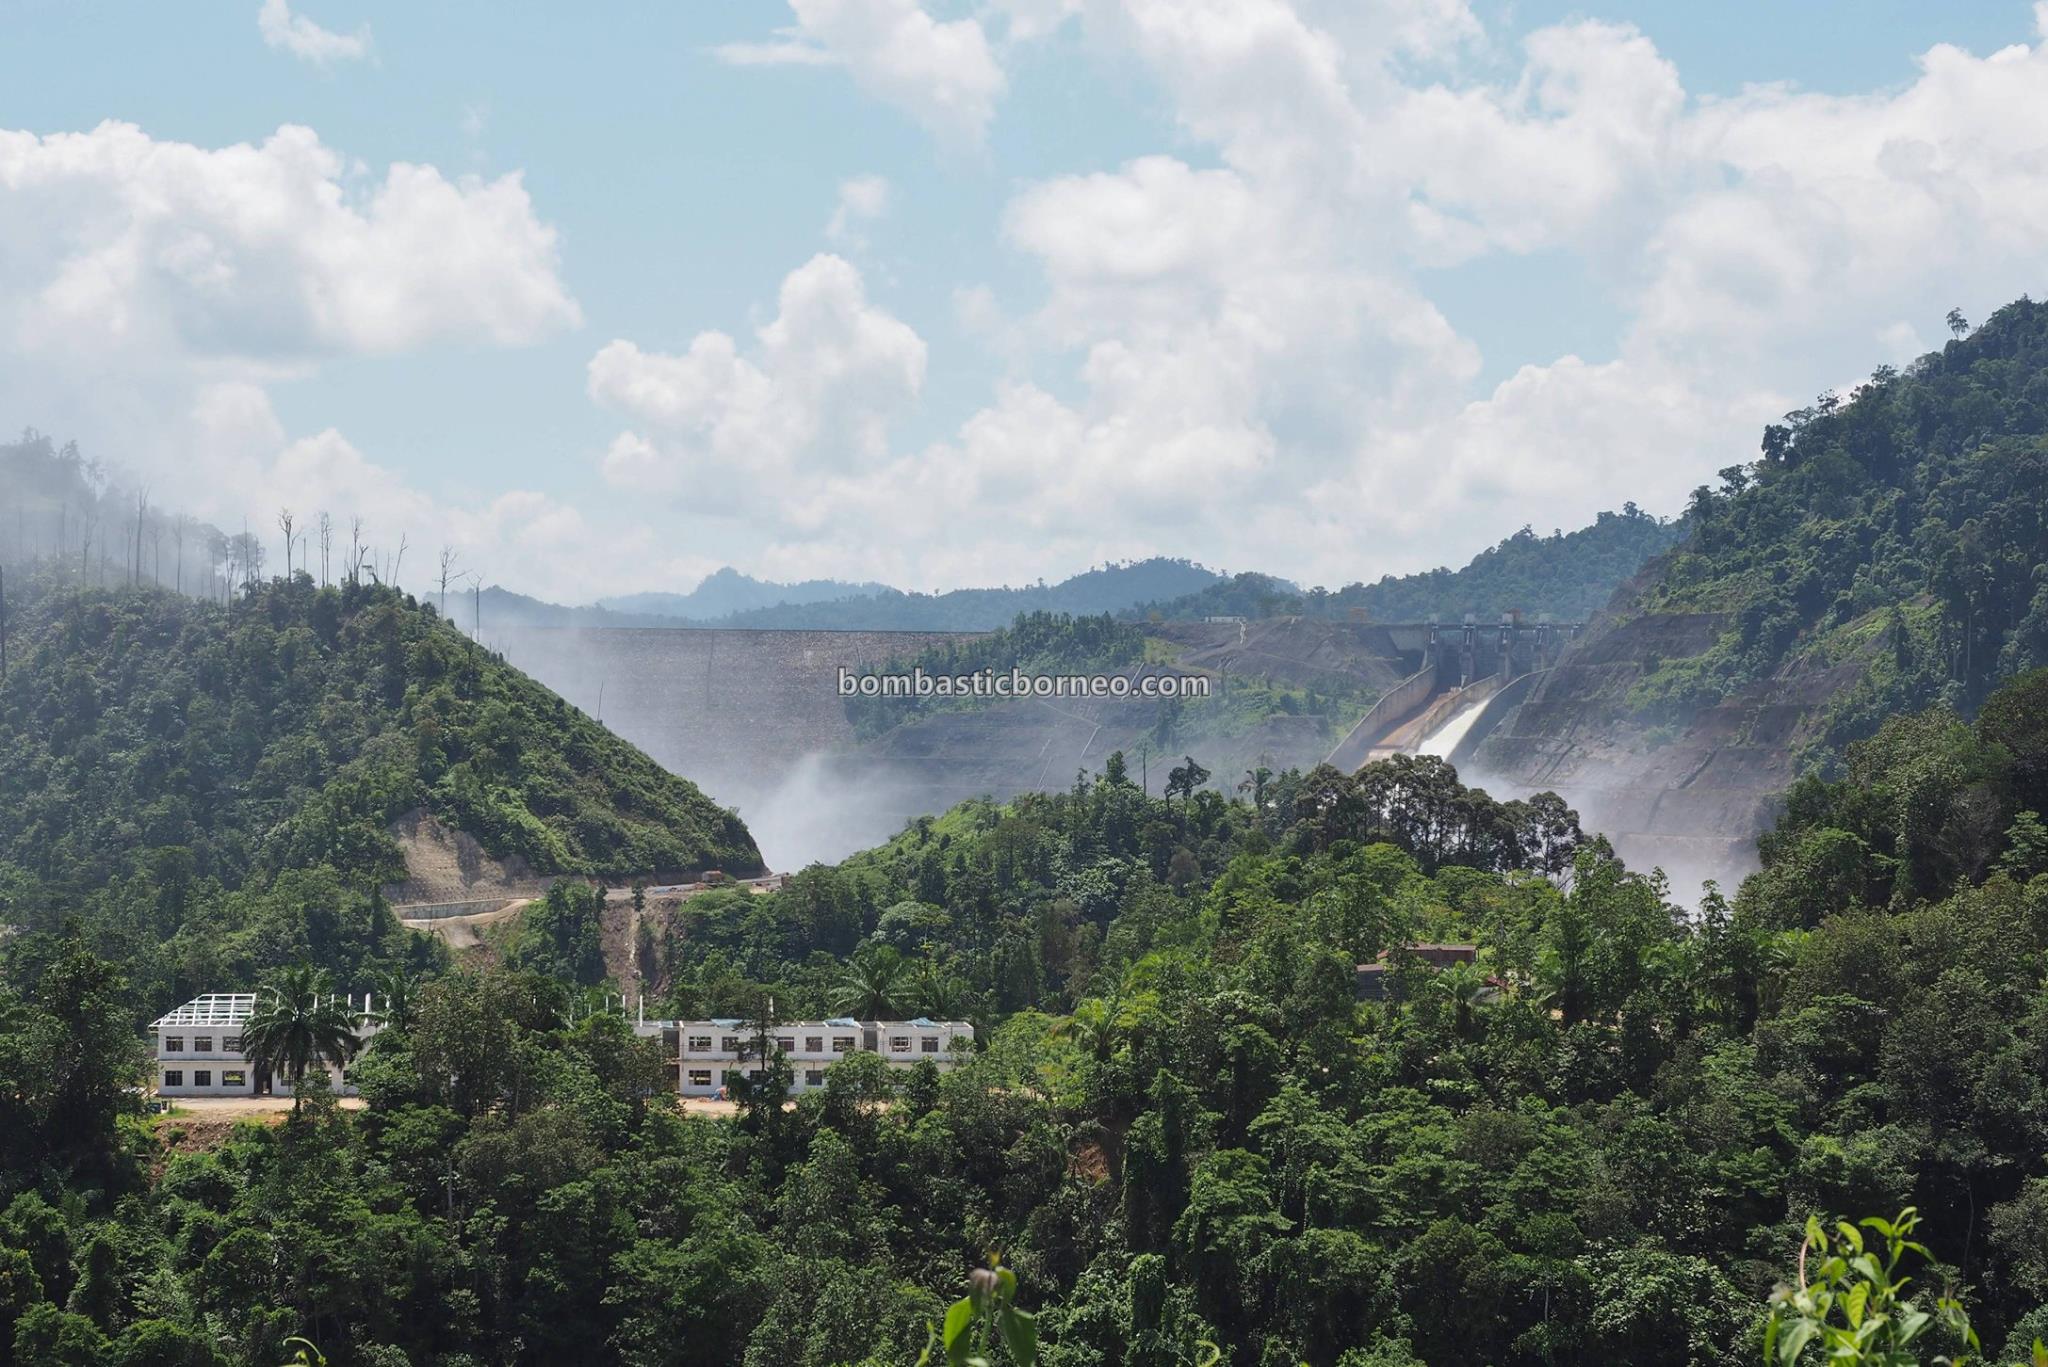 Sarawak, Bakun Hydroelectric Power Dam, Embankment Dam, empangan, backpackers, destination, Belaga, Kapit, Malaysia, Tourism, tourist attraction, travel guide, Trans Borneo, 马来西亚旅游景点